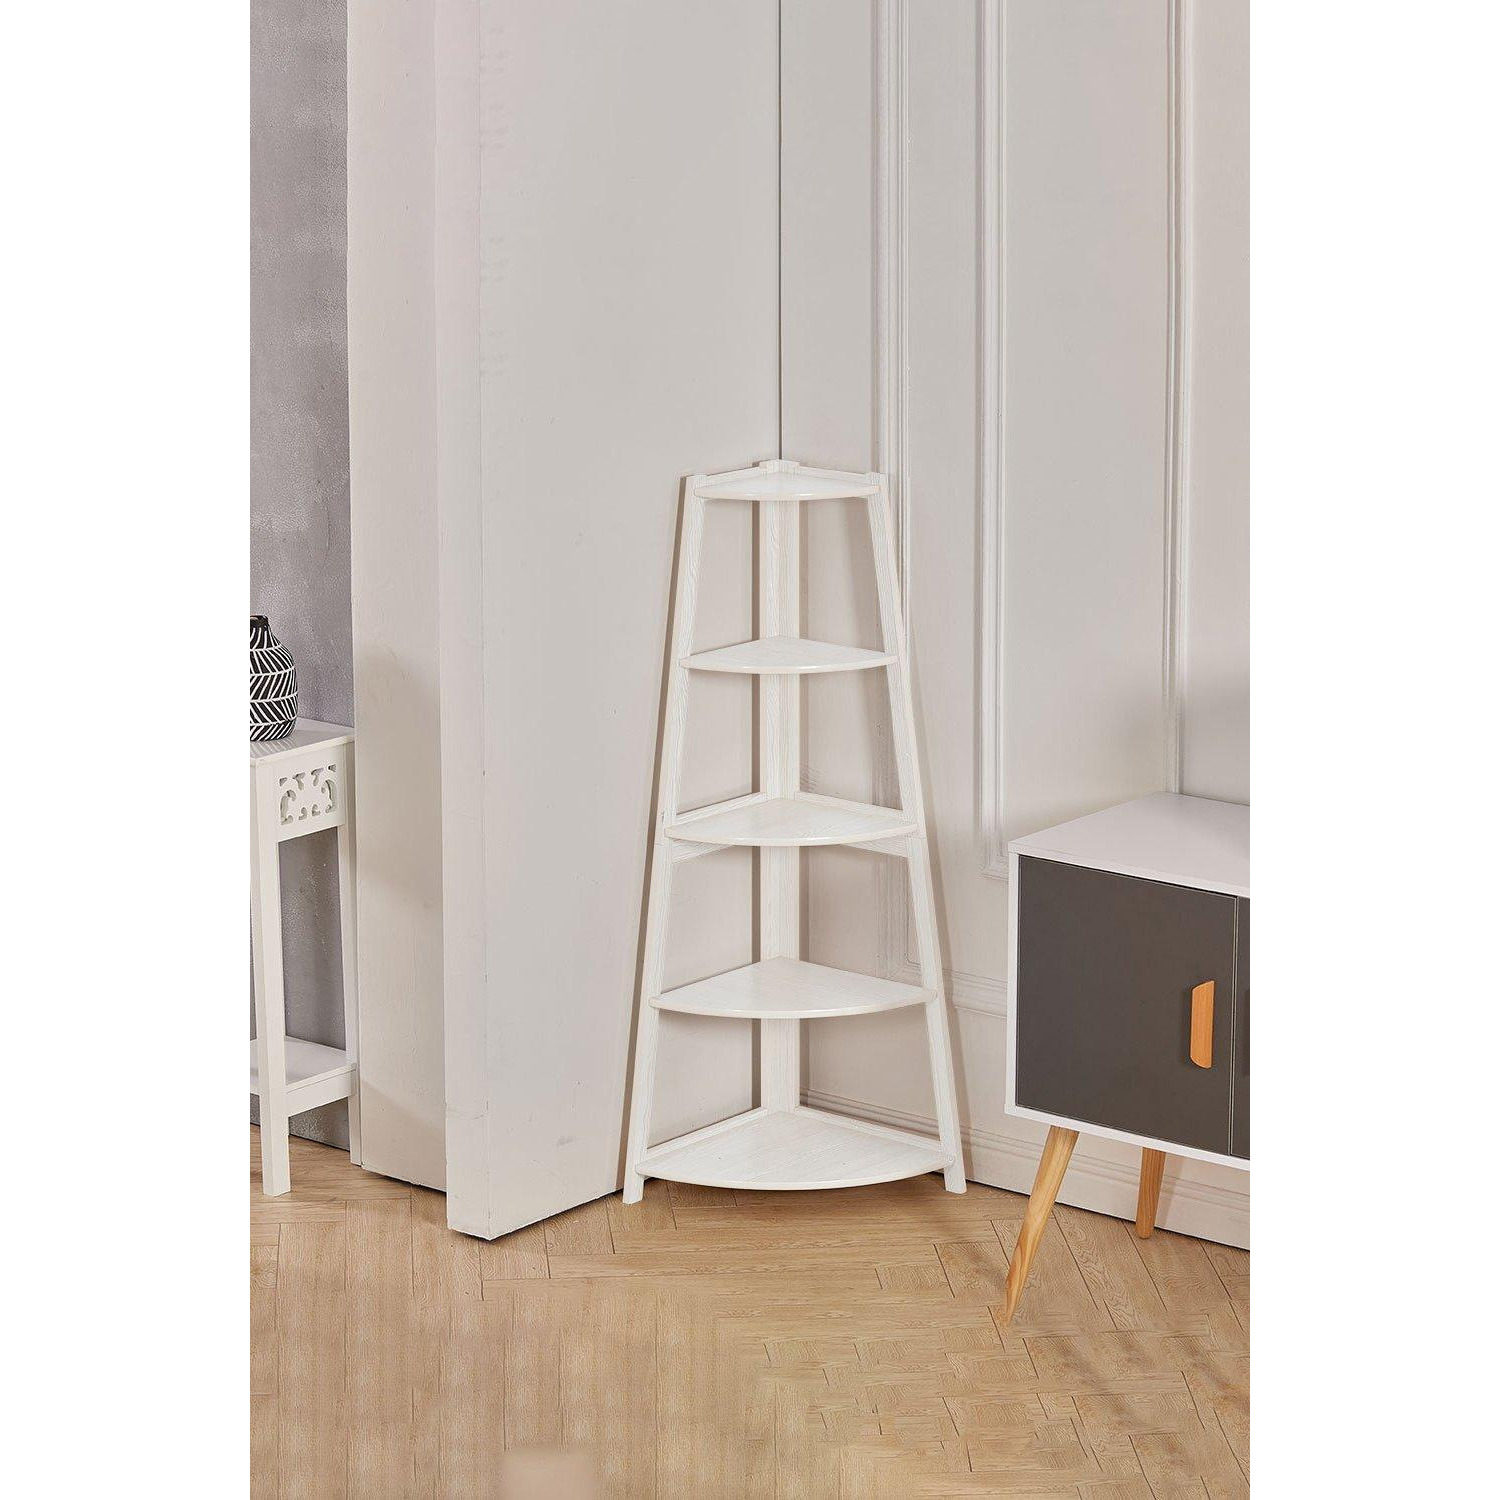 5 Tier Wooden Ladder Corner Bookcase Trapezoidal Fan-Shaped Book Shelf Storage Shelf - image 1